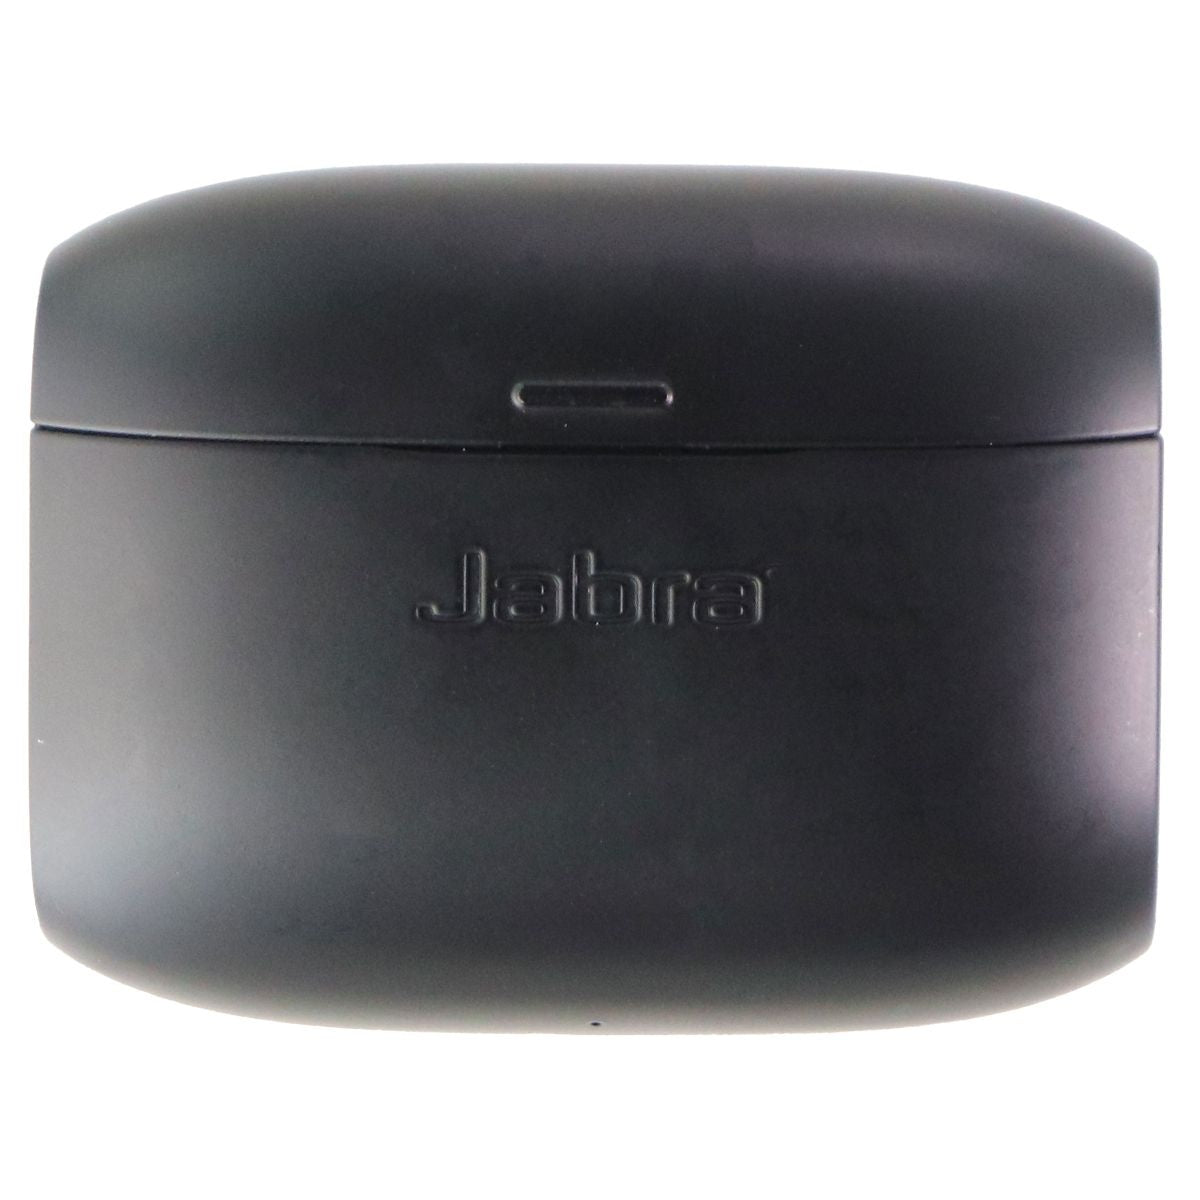 Jabra Charging Case for Jabra Elite 65t True Wireless Earbud Headphones - Black iPod, Audio Player Accessories - Other Portable Audio Accs Jabra    - Simple Cell Bulk Wholesale Pricing - USA Seller